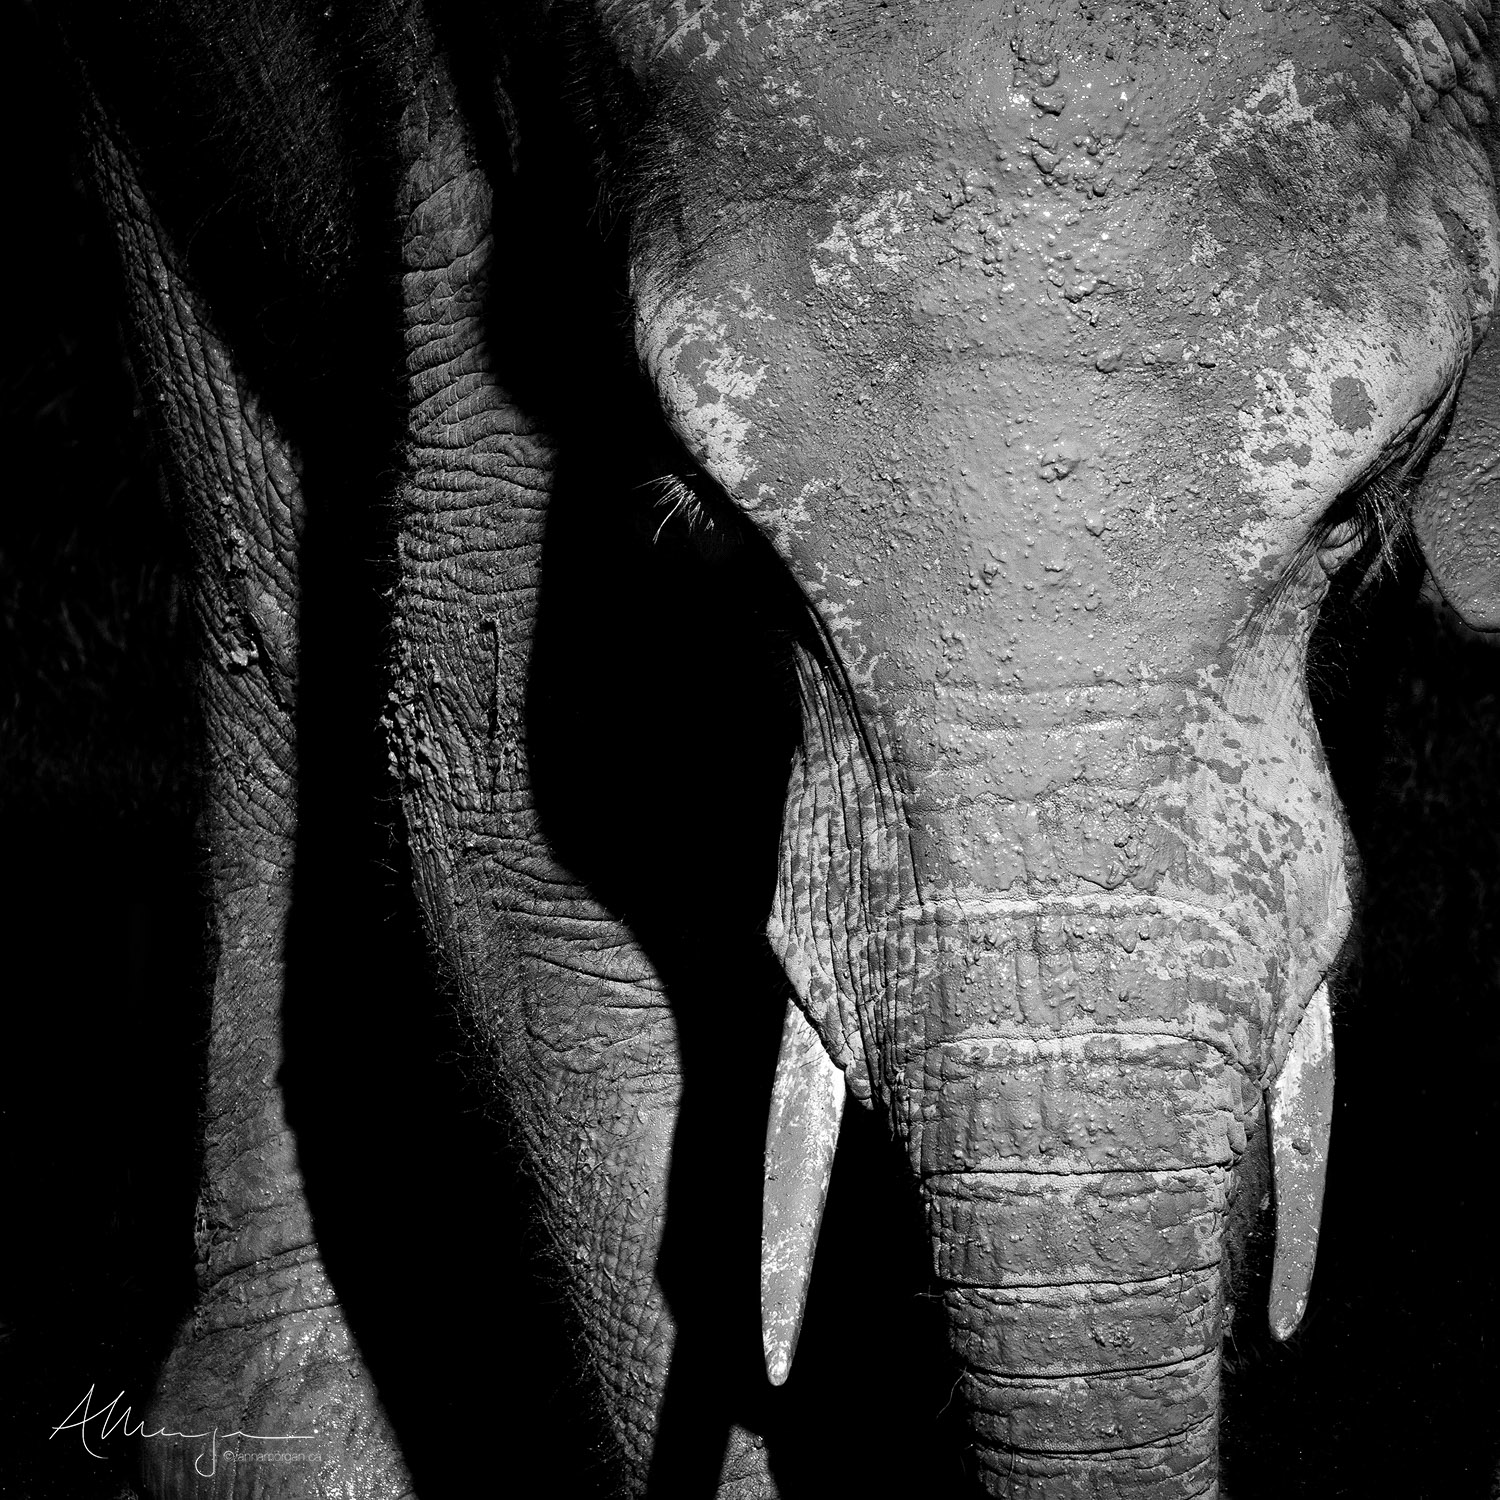 Monochrome close up image of an elephant